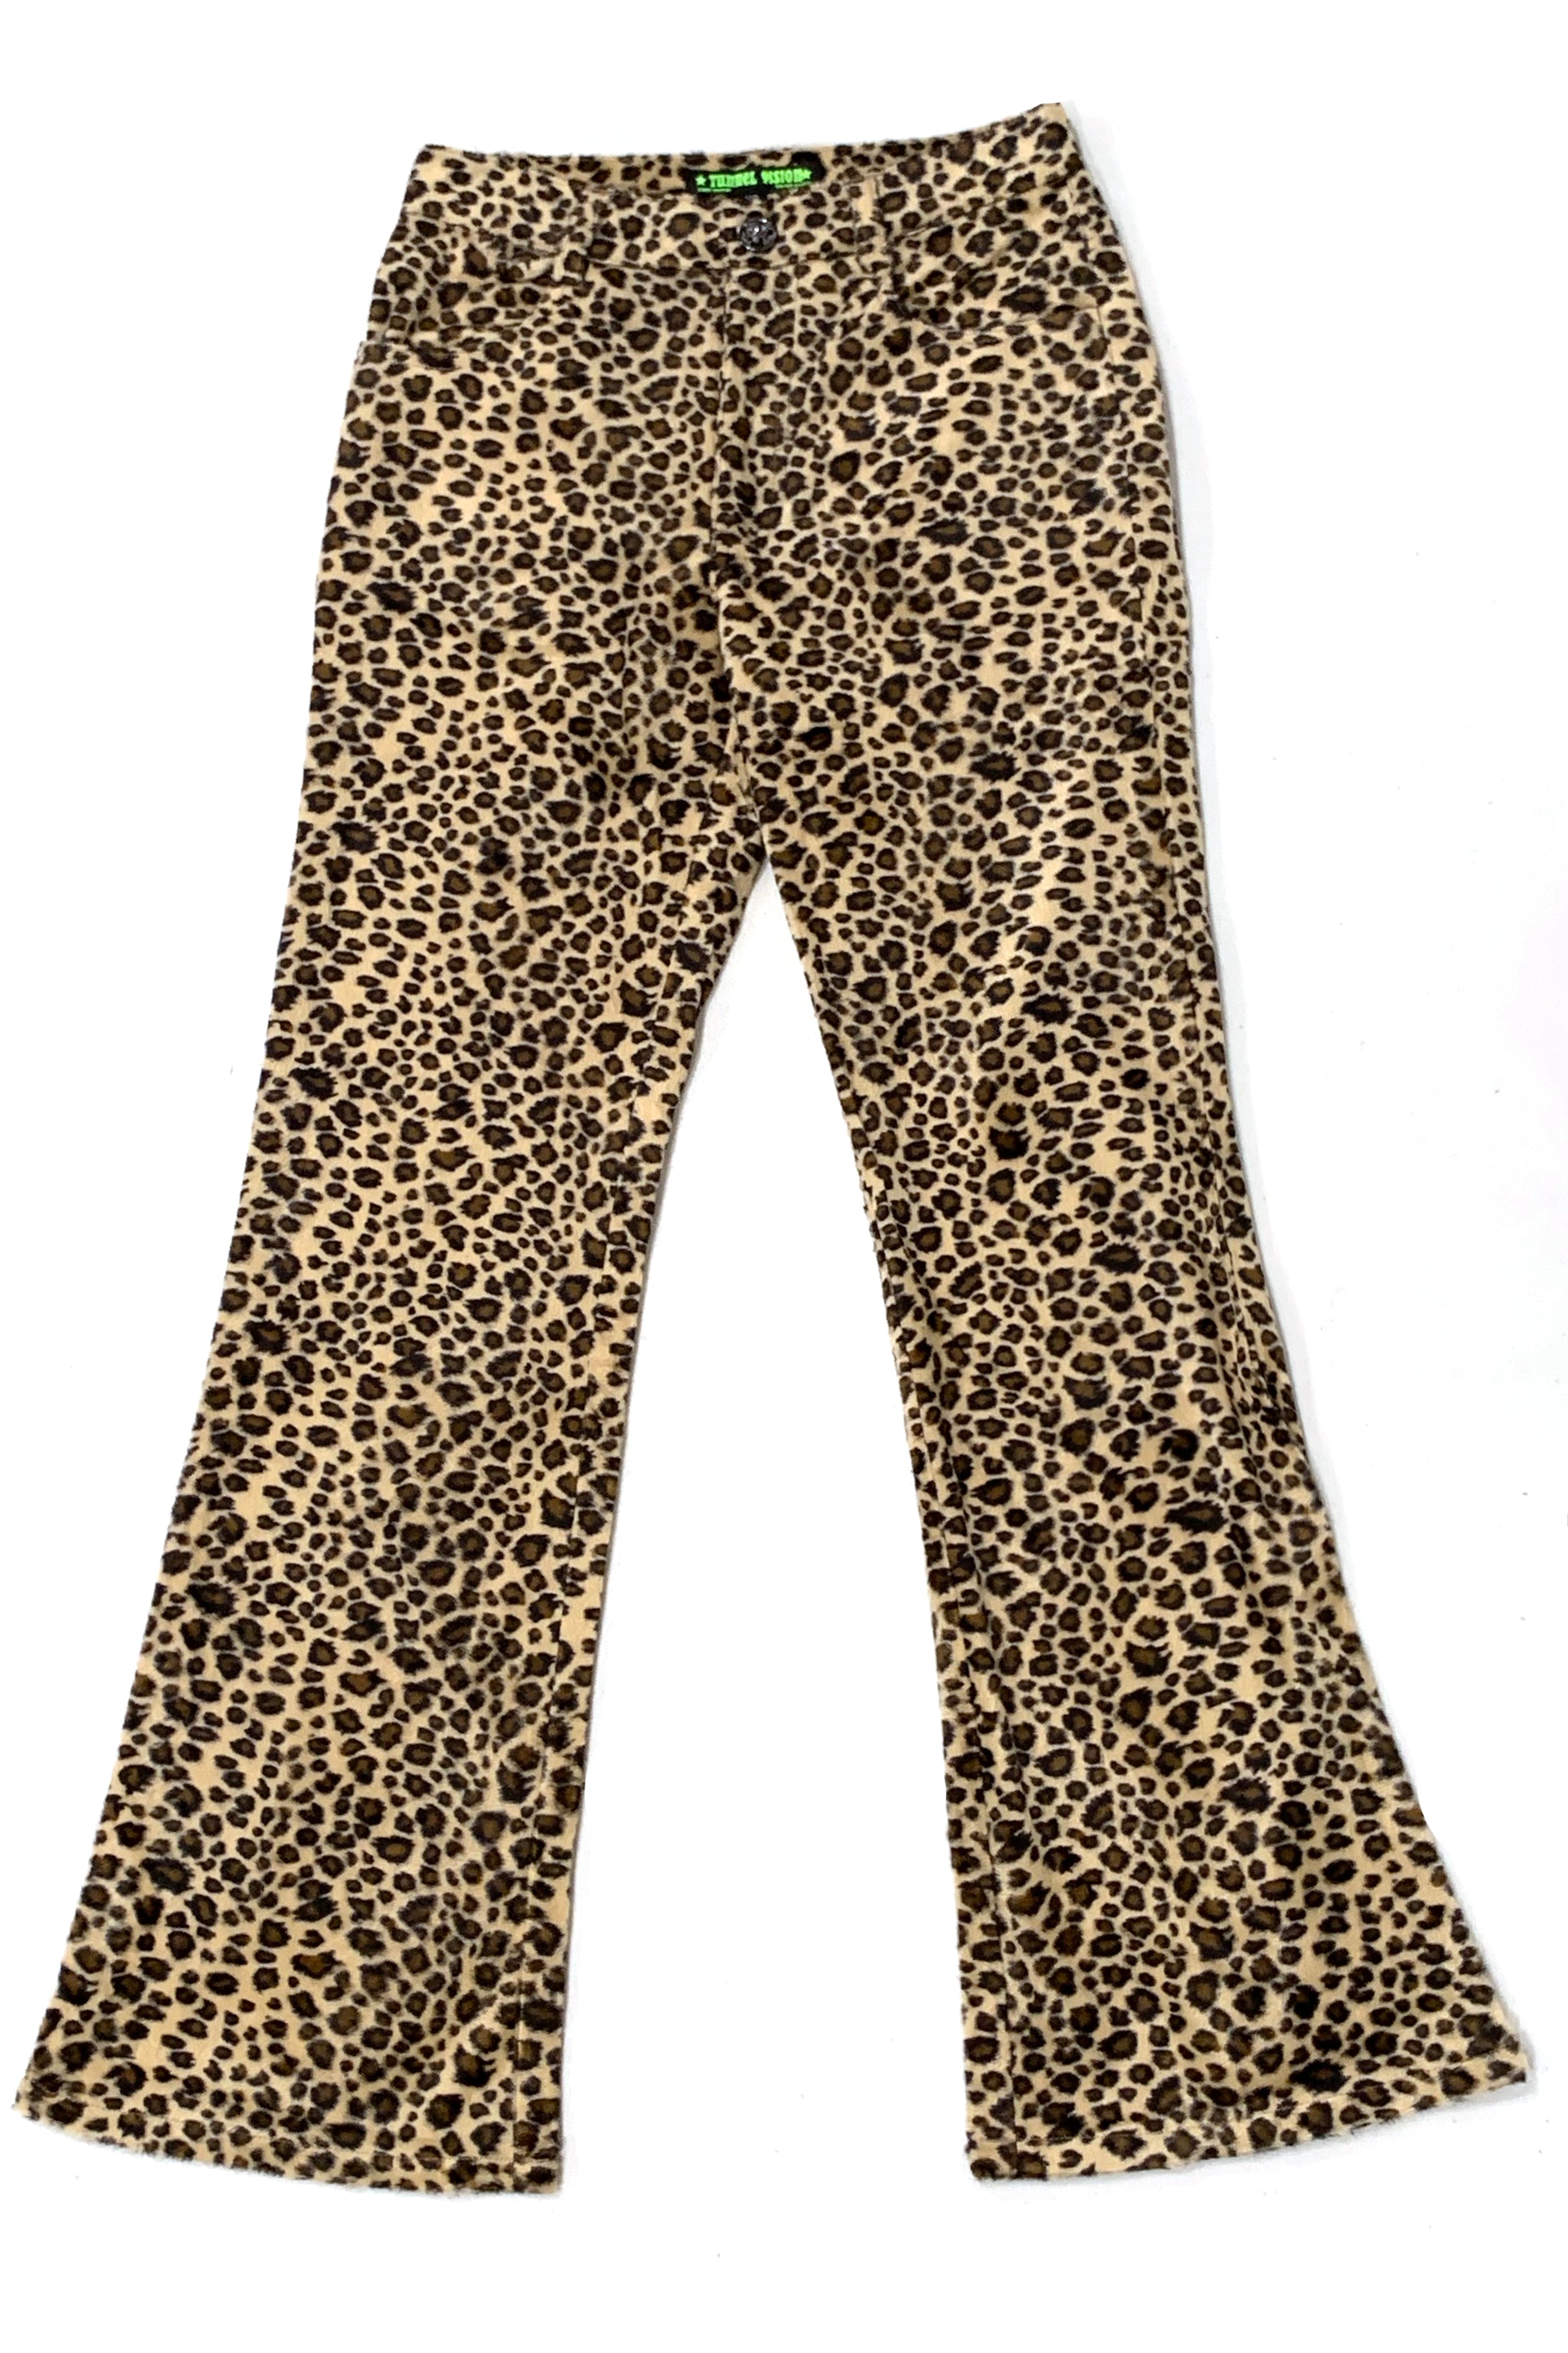 Leopard Denim Bell Bottom Pants | Freckled Poppy Boutique